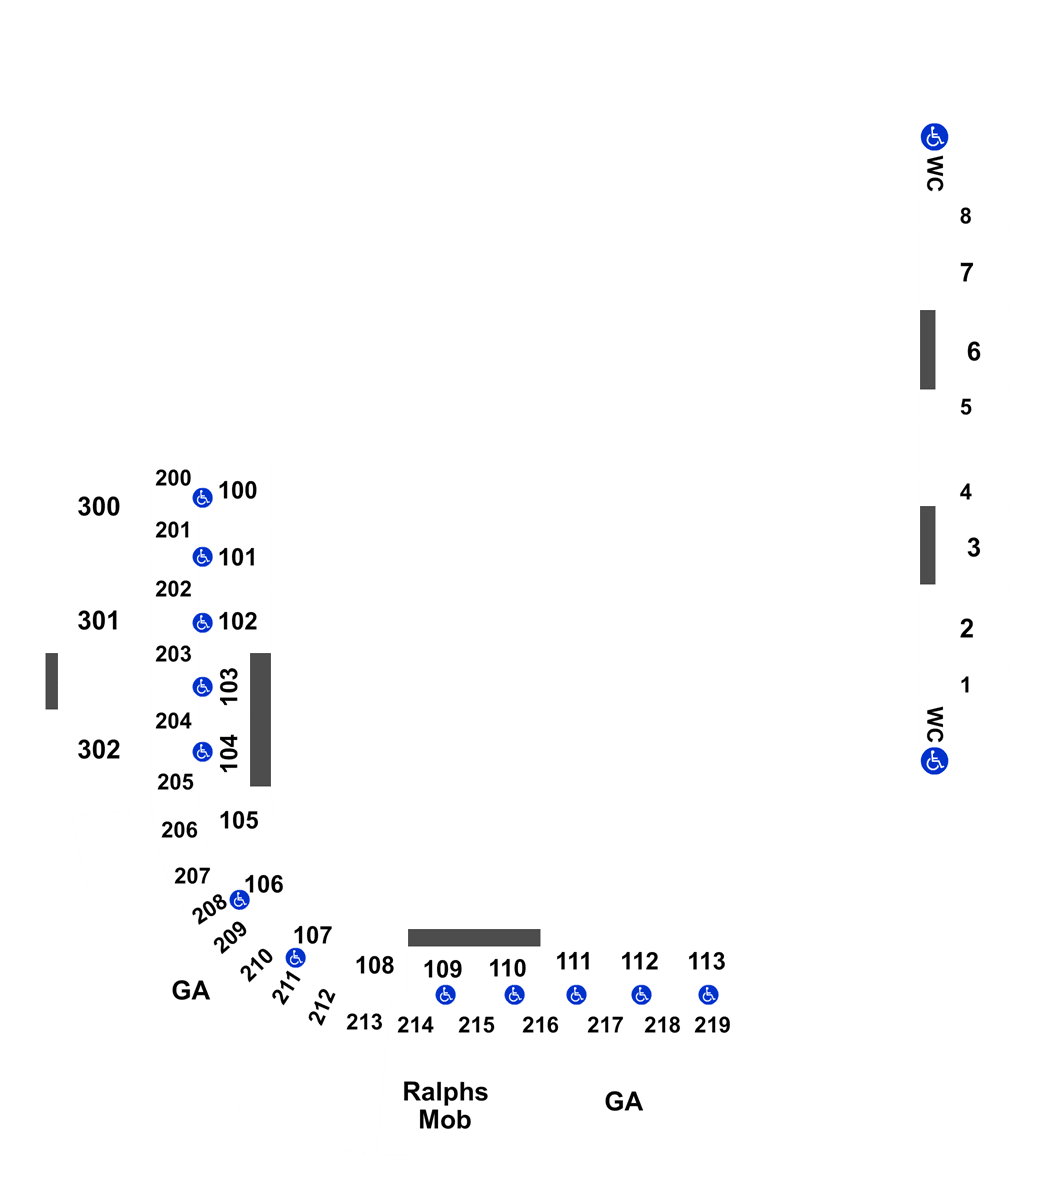 Tampa Bay Rowdies Stadium Seating Chart